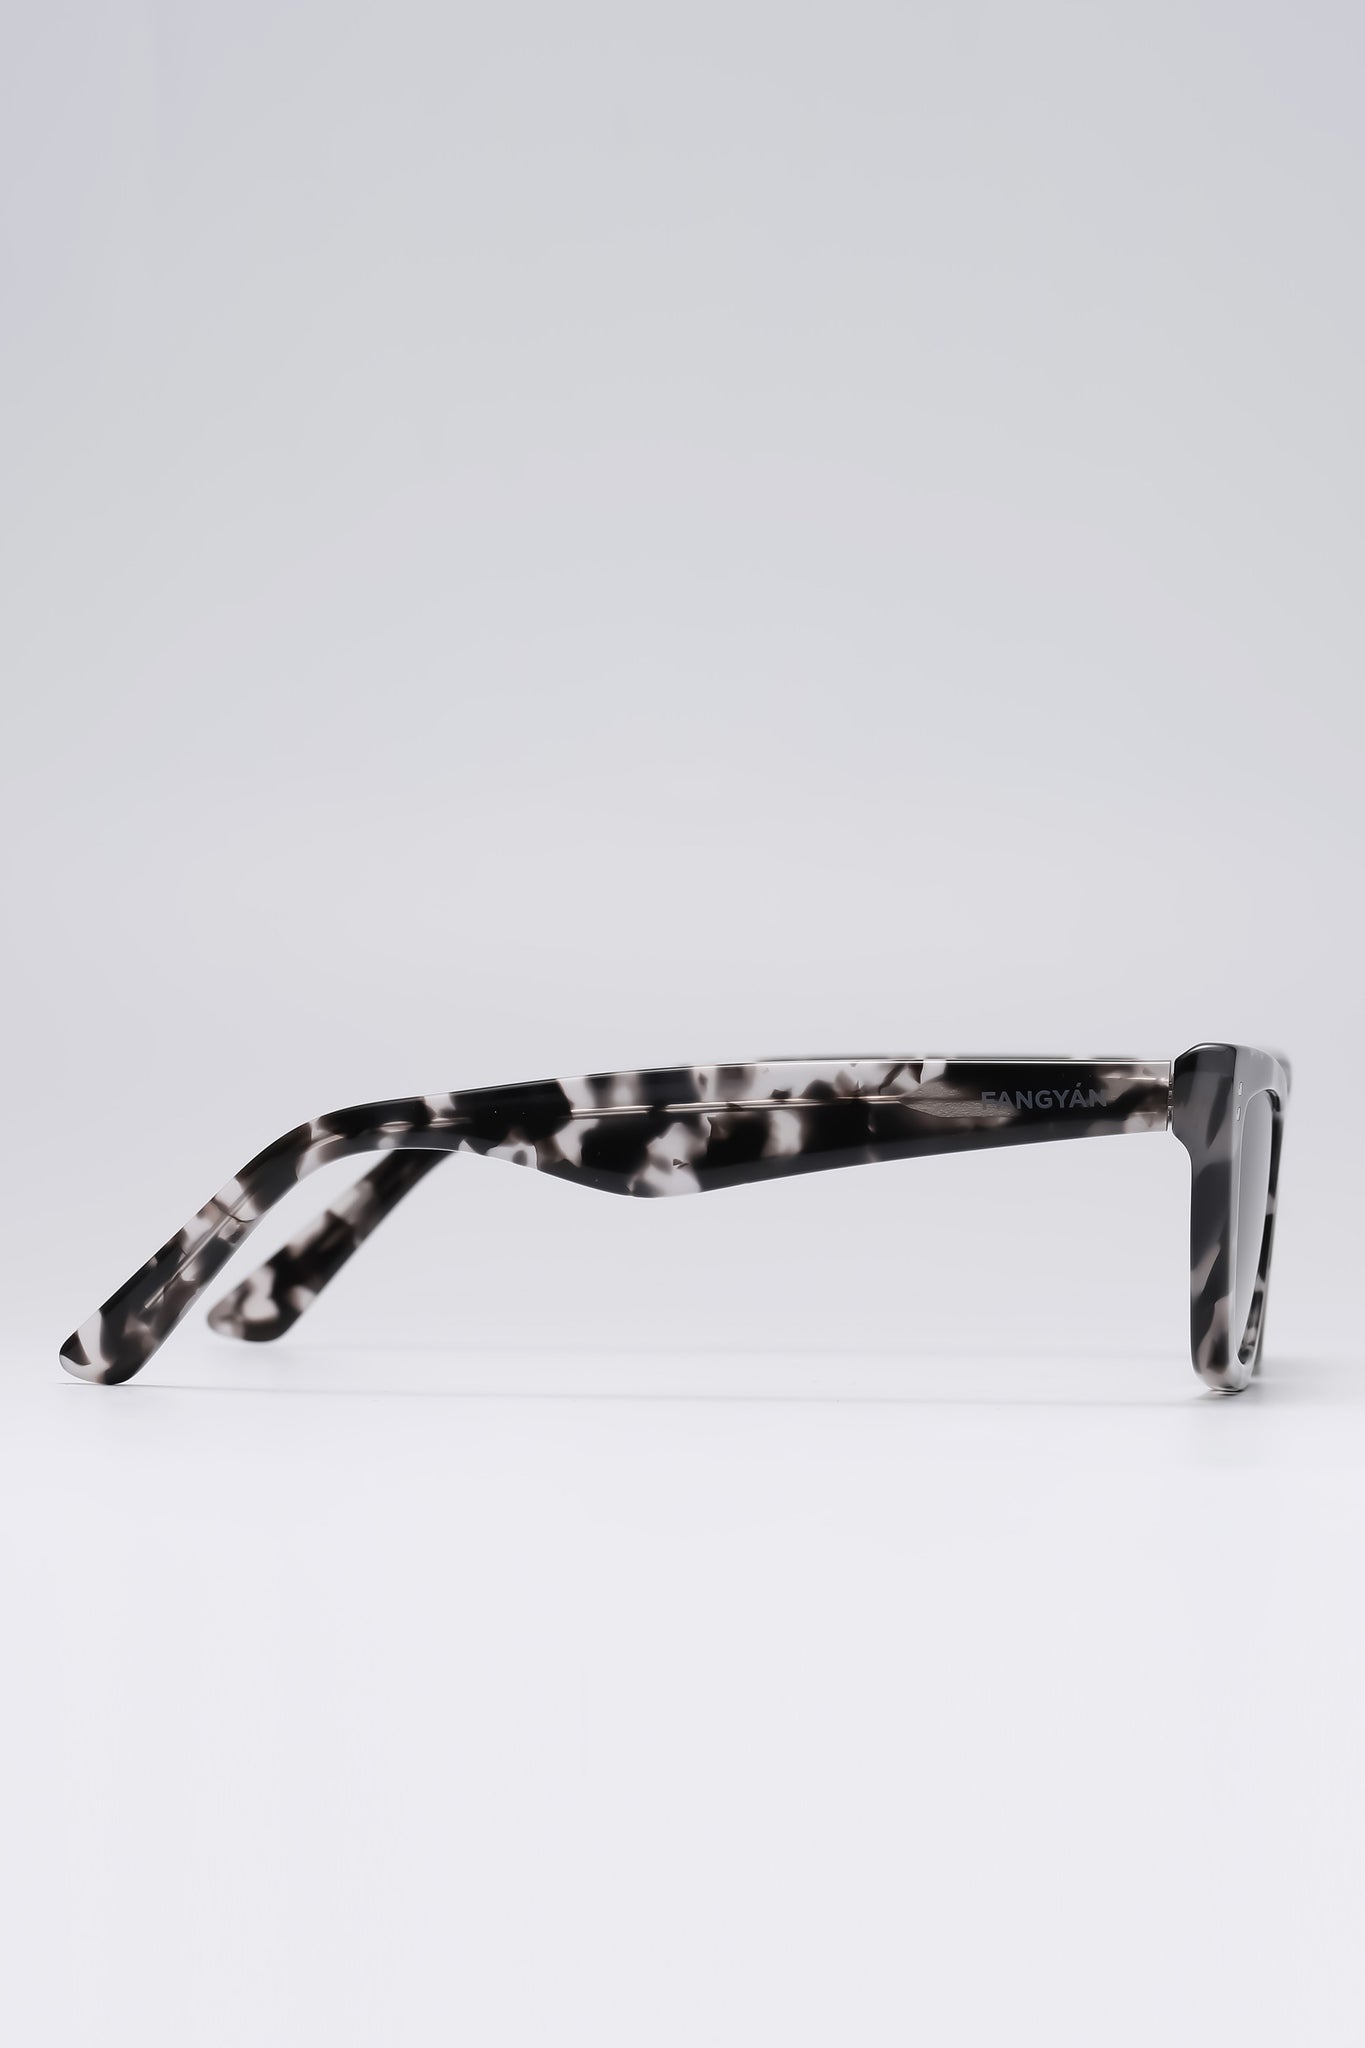 Fangyan | Cat-Eye Rectangular Black Sunglasses